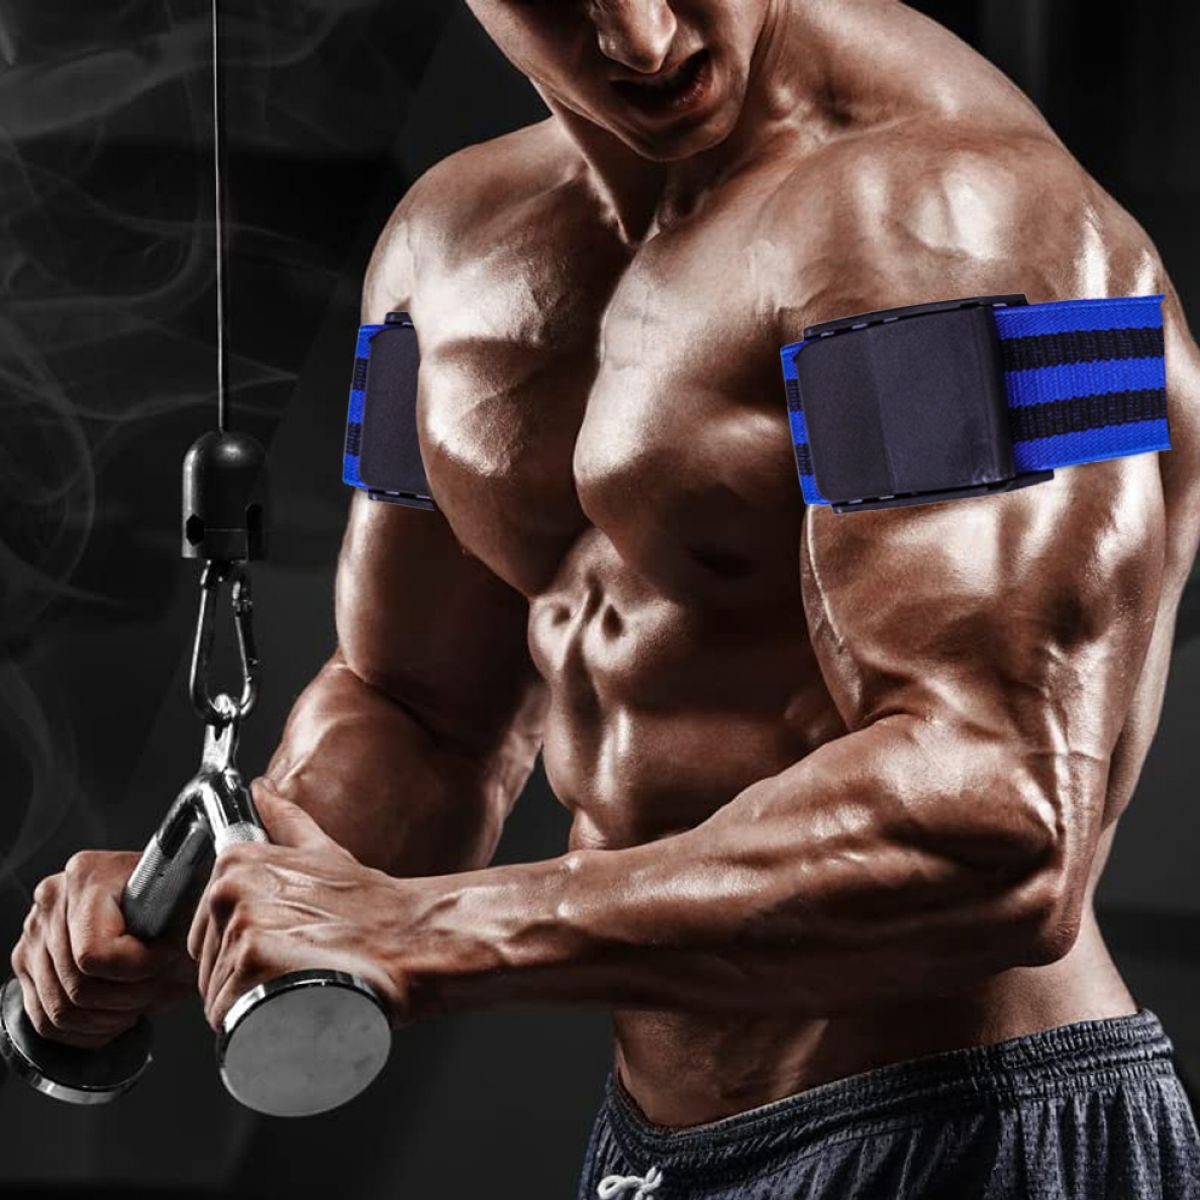 Jormftte Trainingsband für Bodybuilding Fitness-Blutfluss Blau Band Fitness Beschränkung